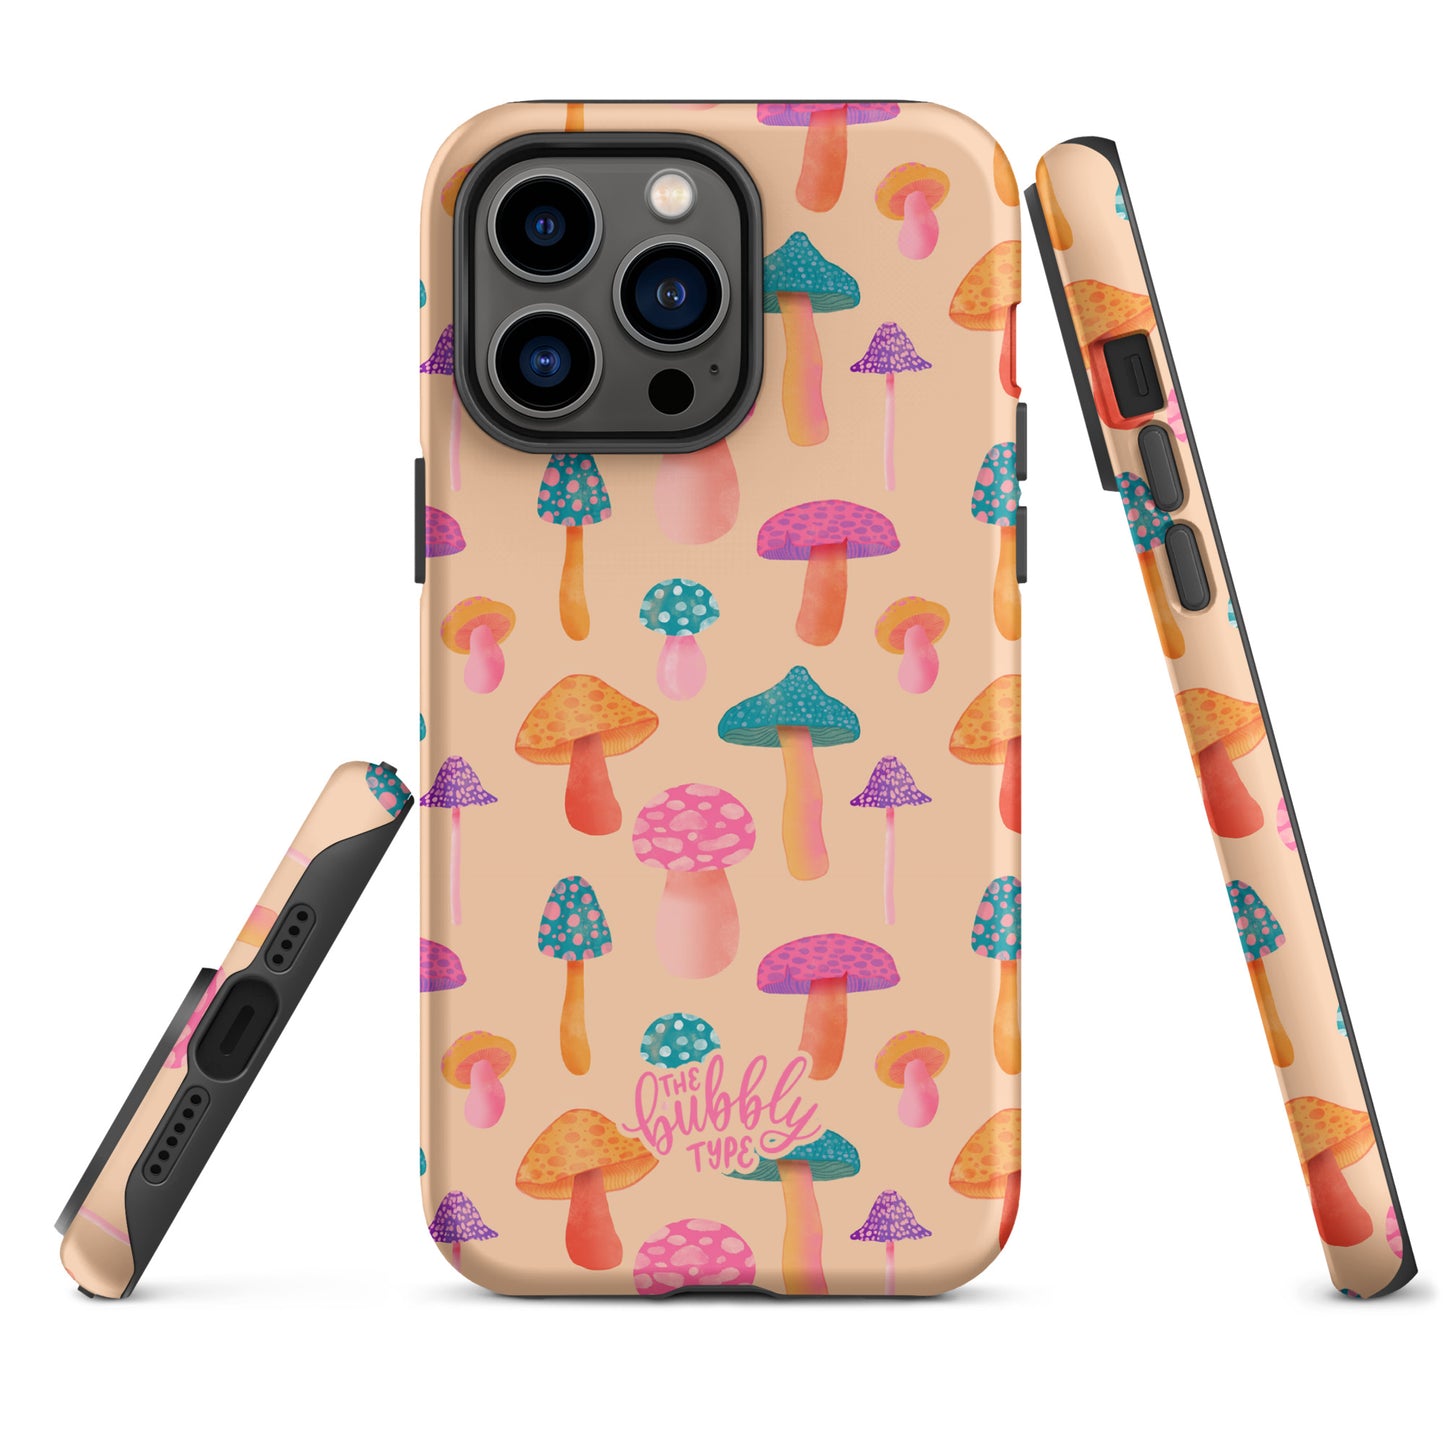 Colourful Mushrooms Tough iPhone case